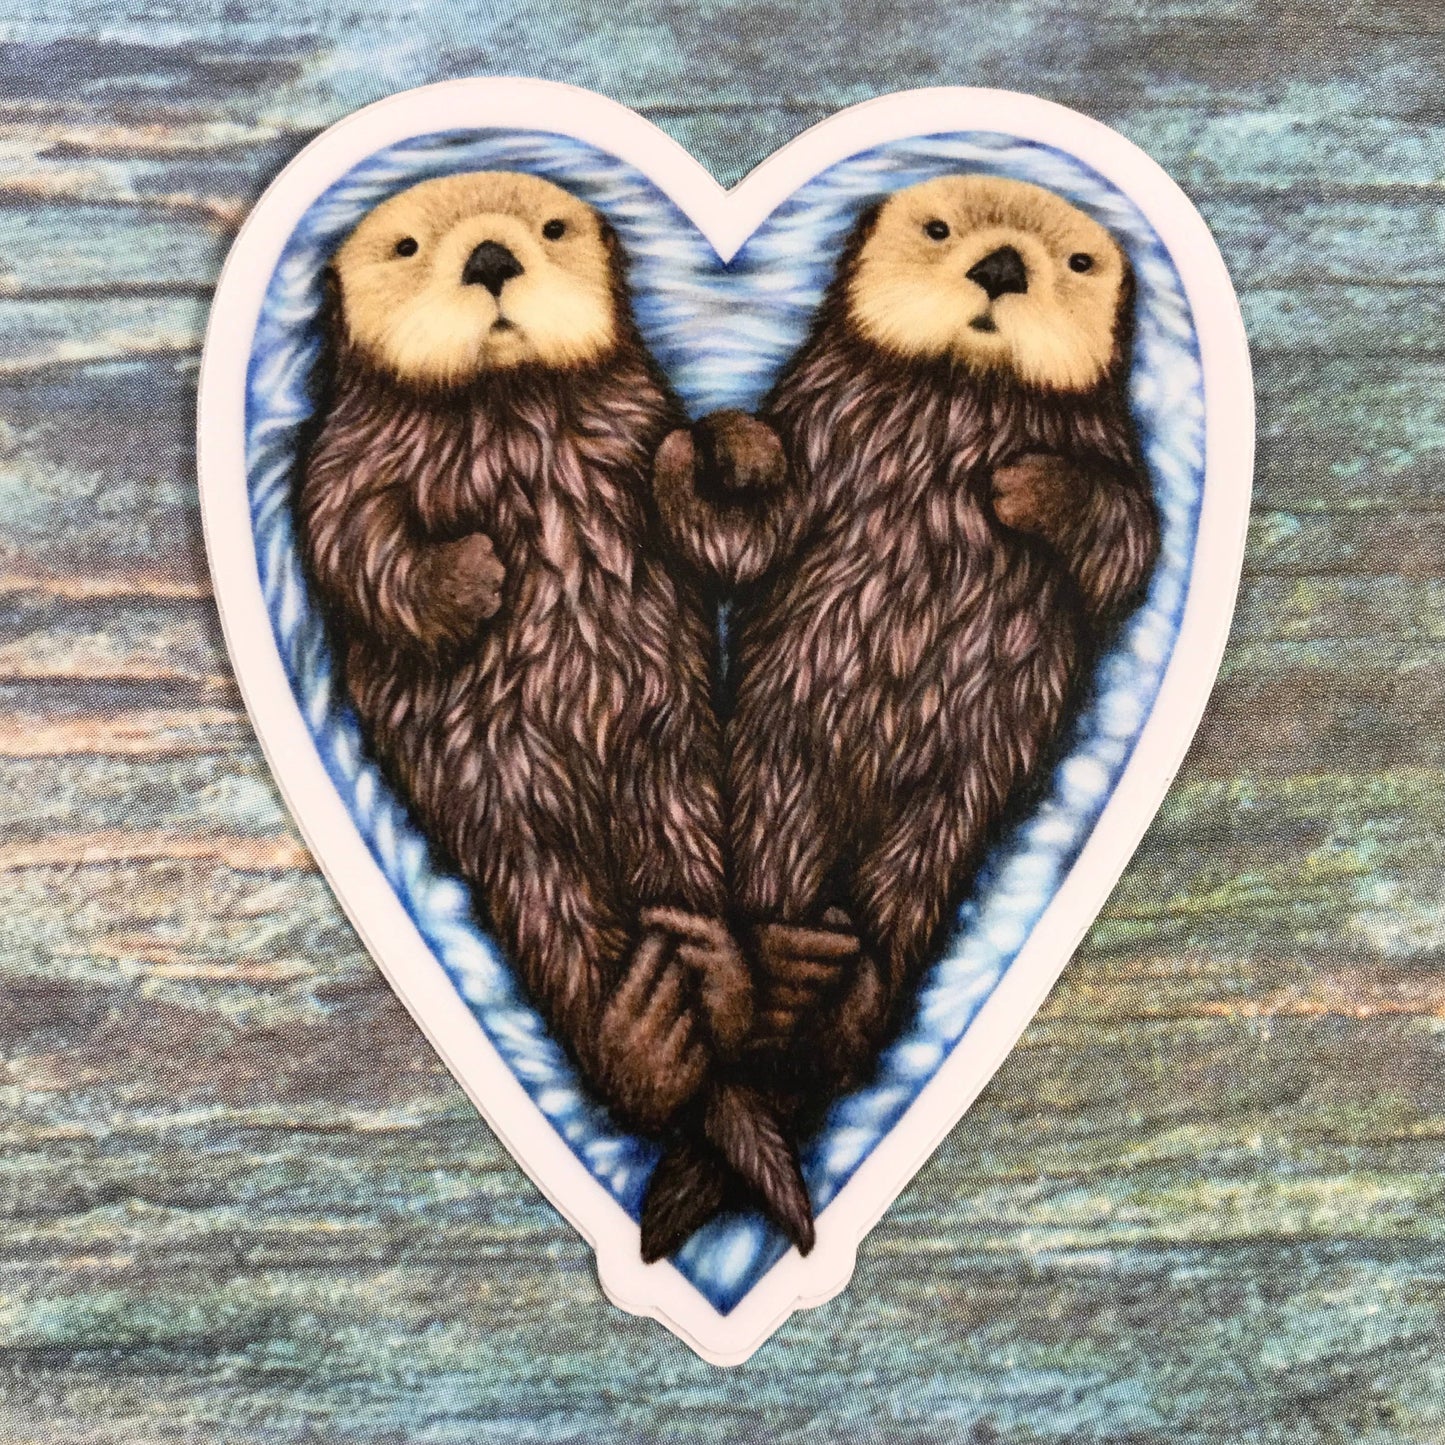 Abundance Illustration - Otter heart sticker